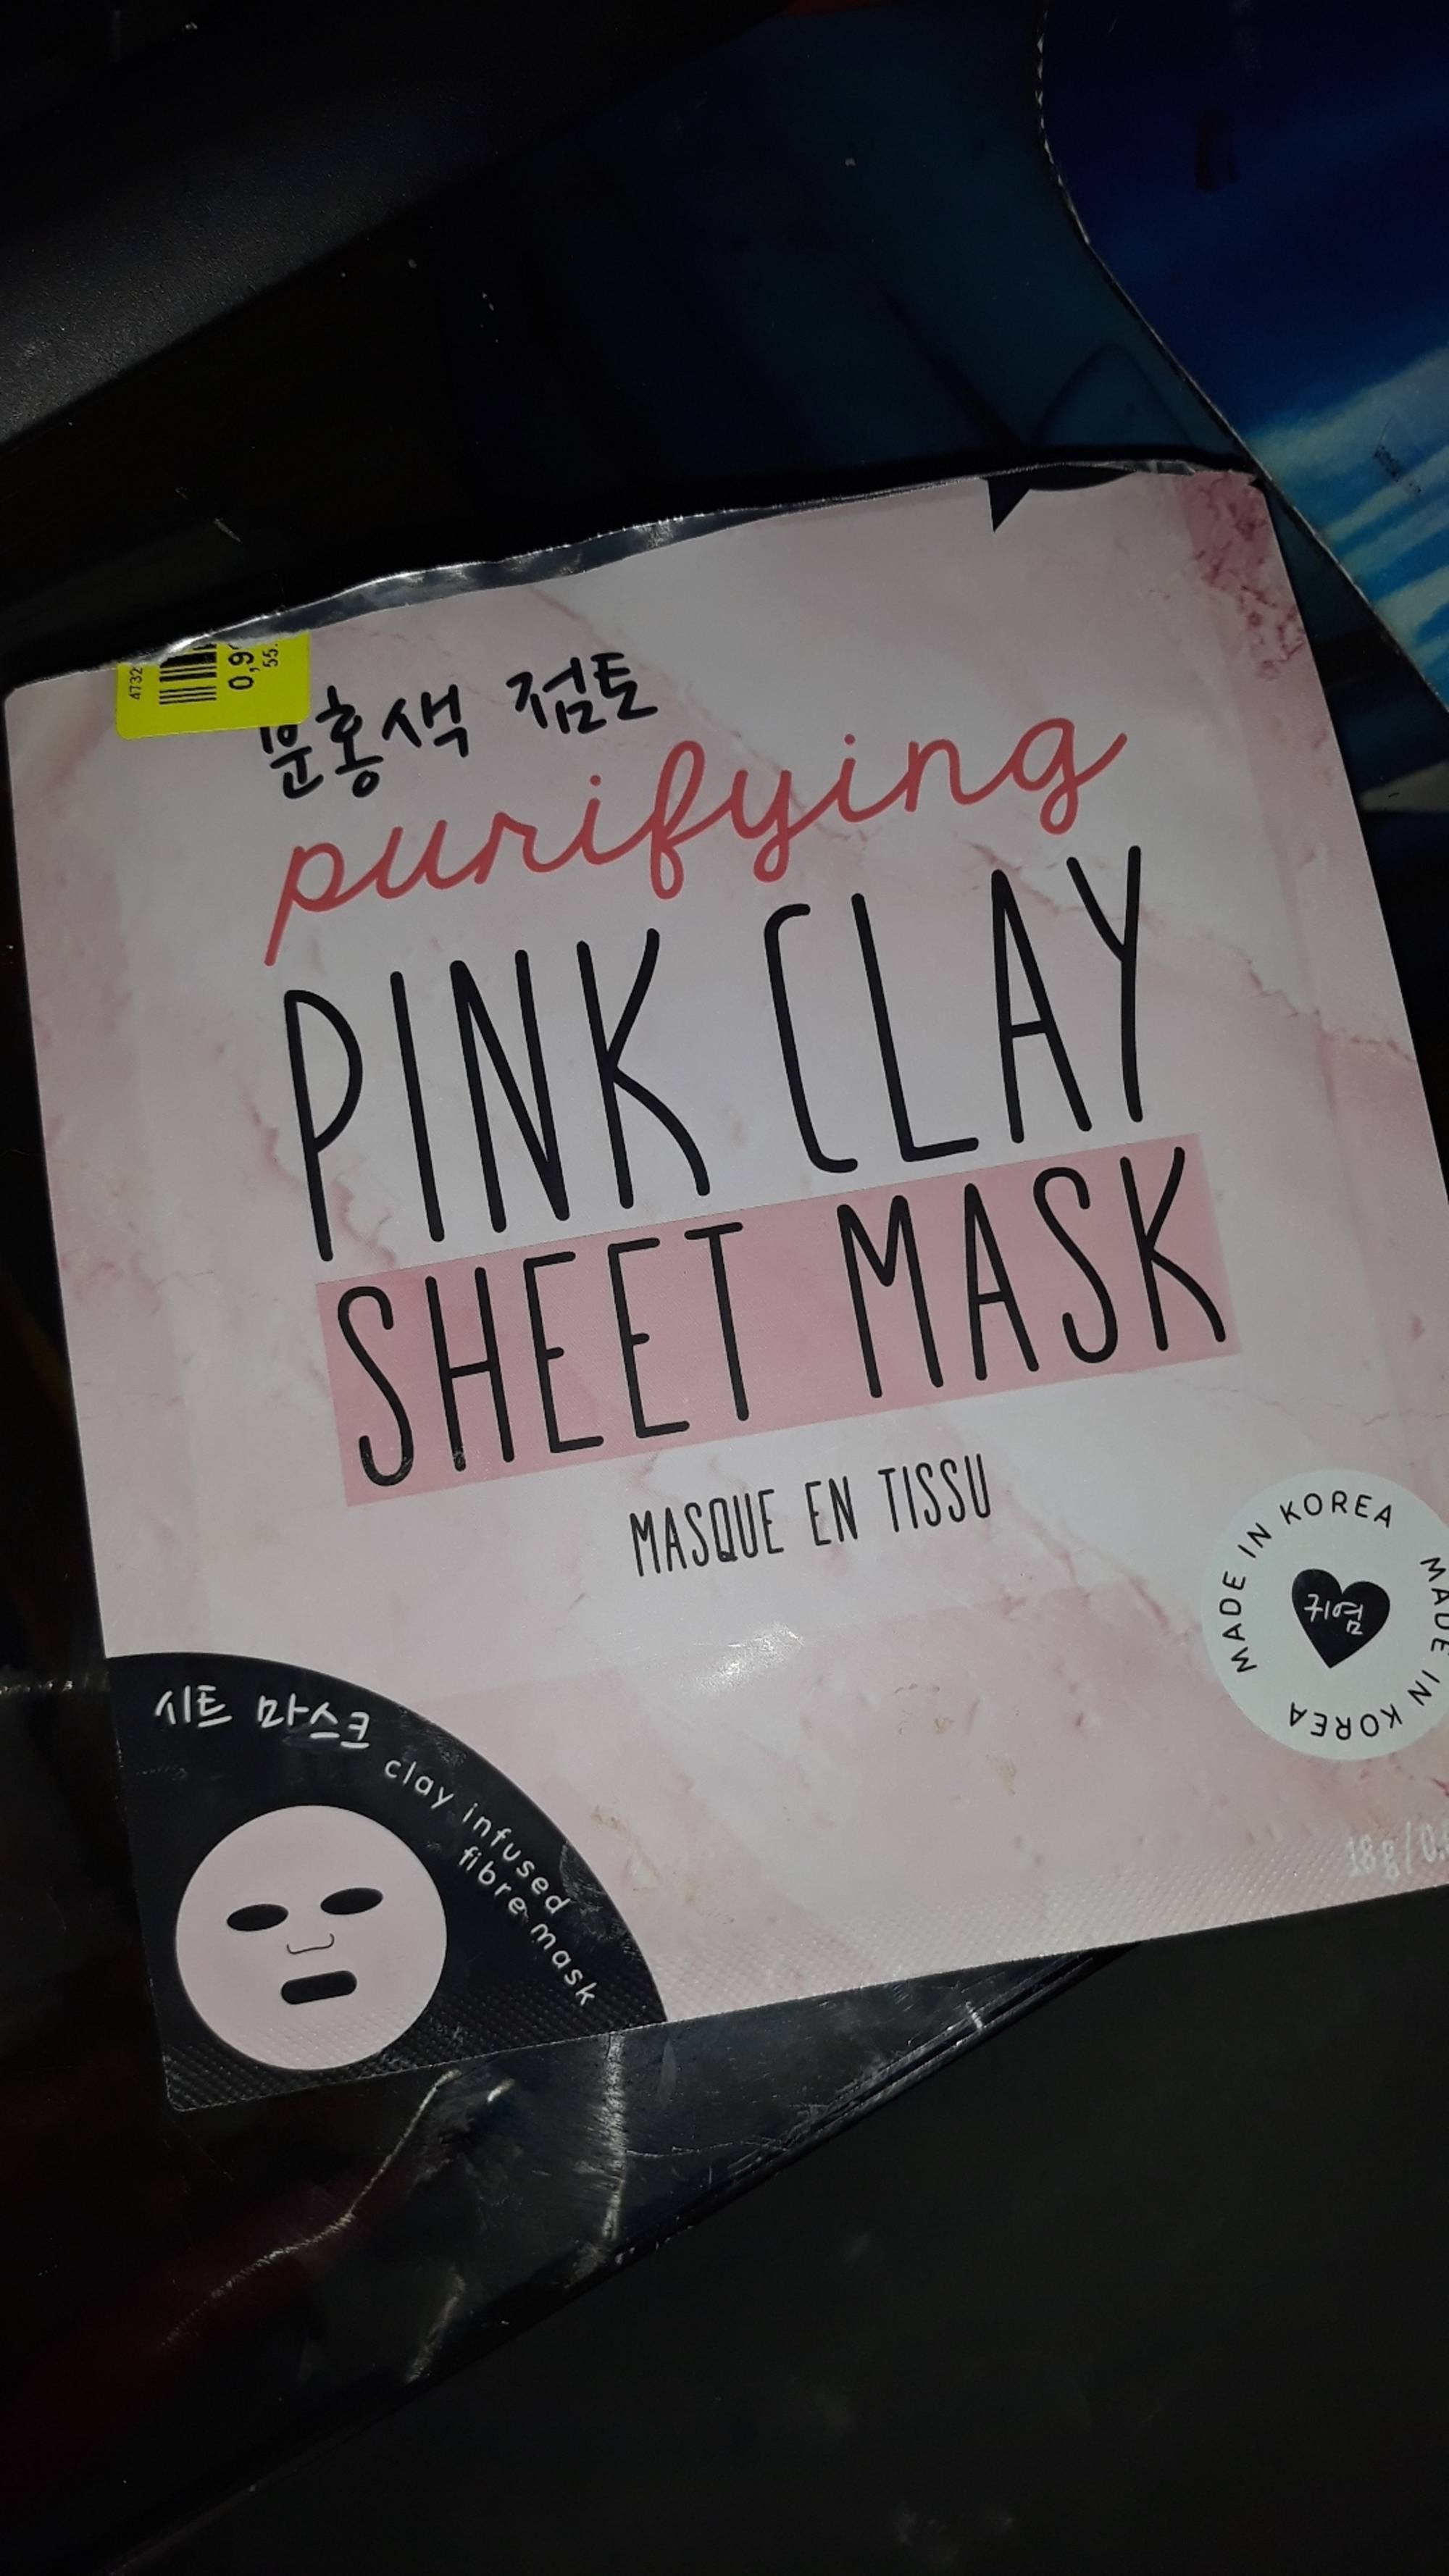 OH K! - Purifying - Pink clay sheet mask